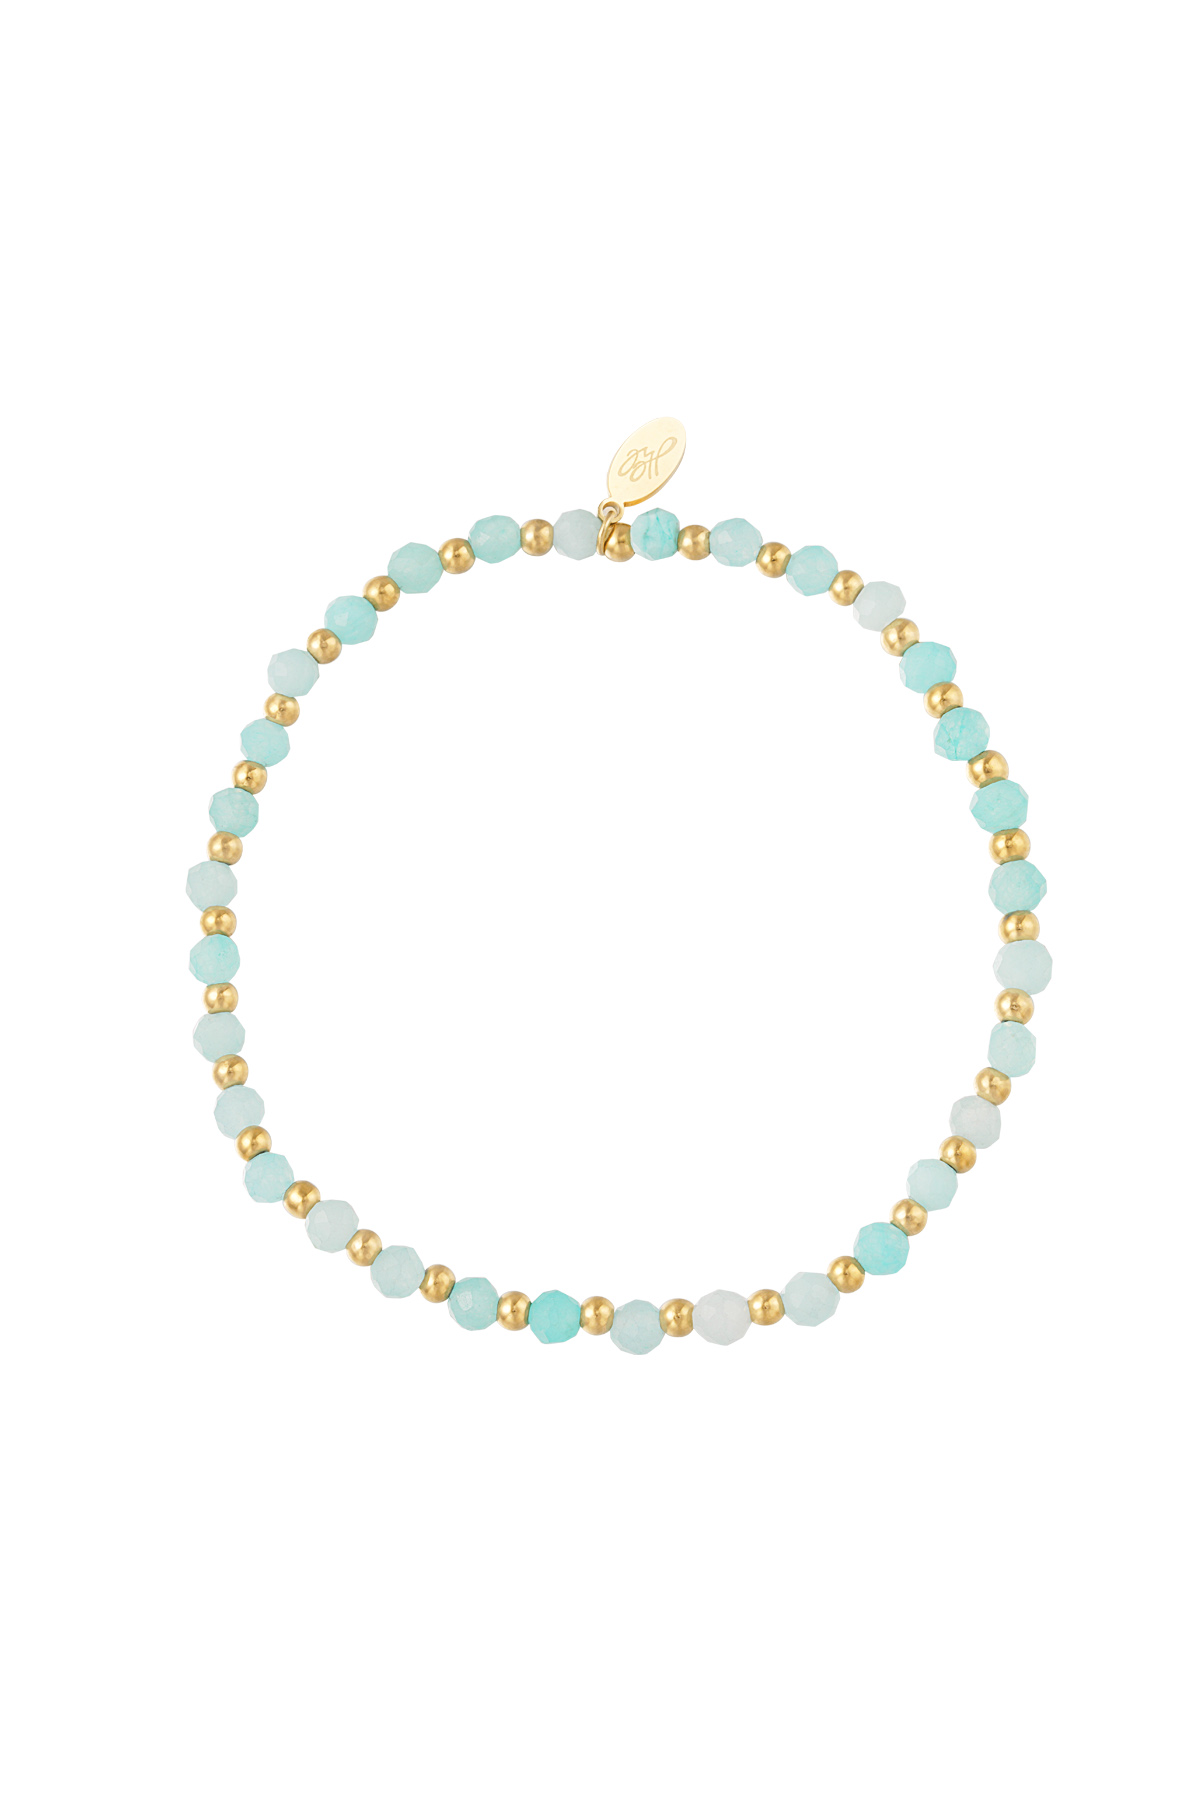 Bleu & Or / Bracelet perles - doré/bleu Image12